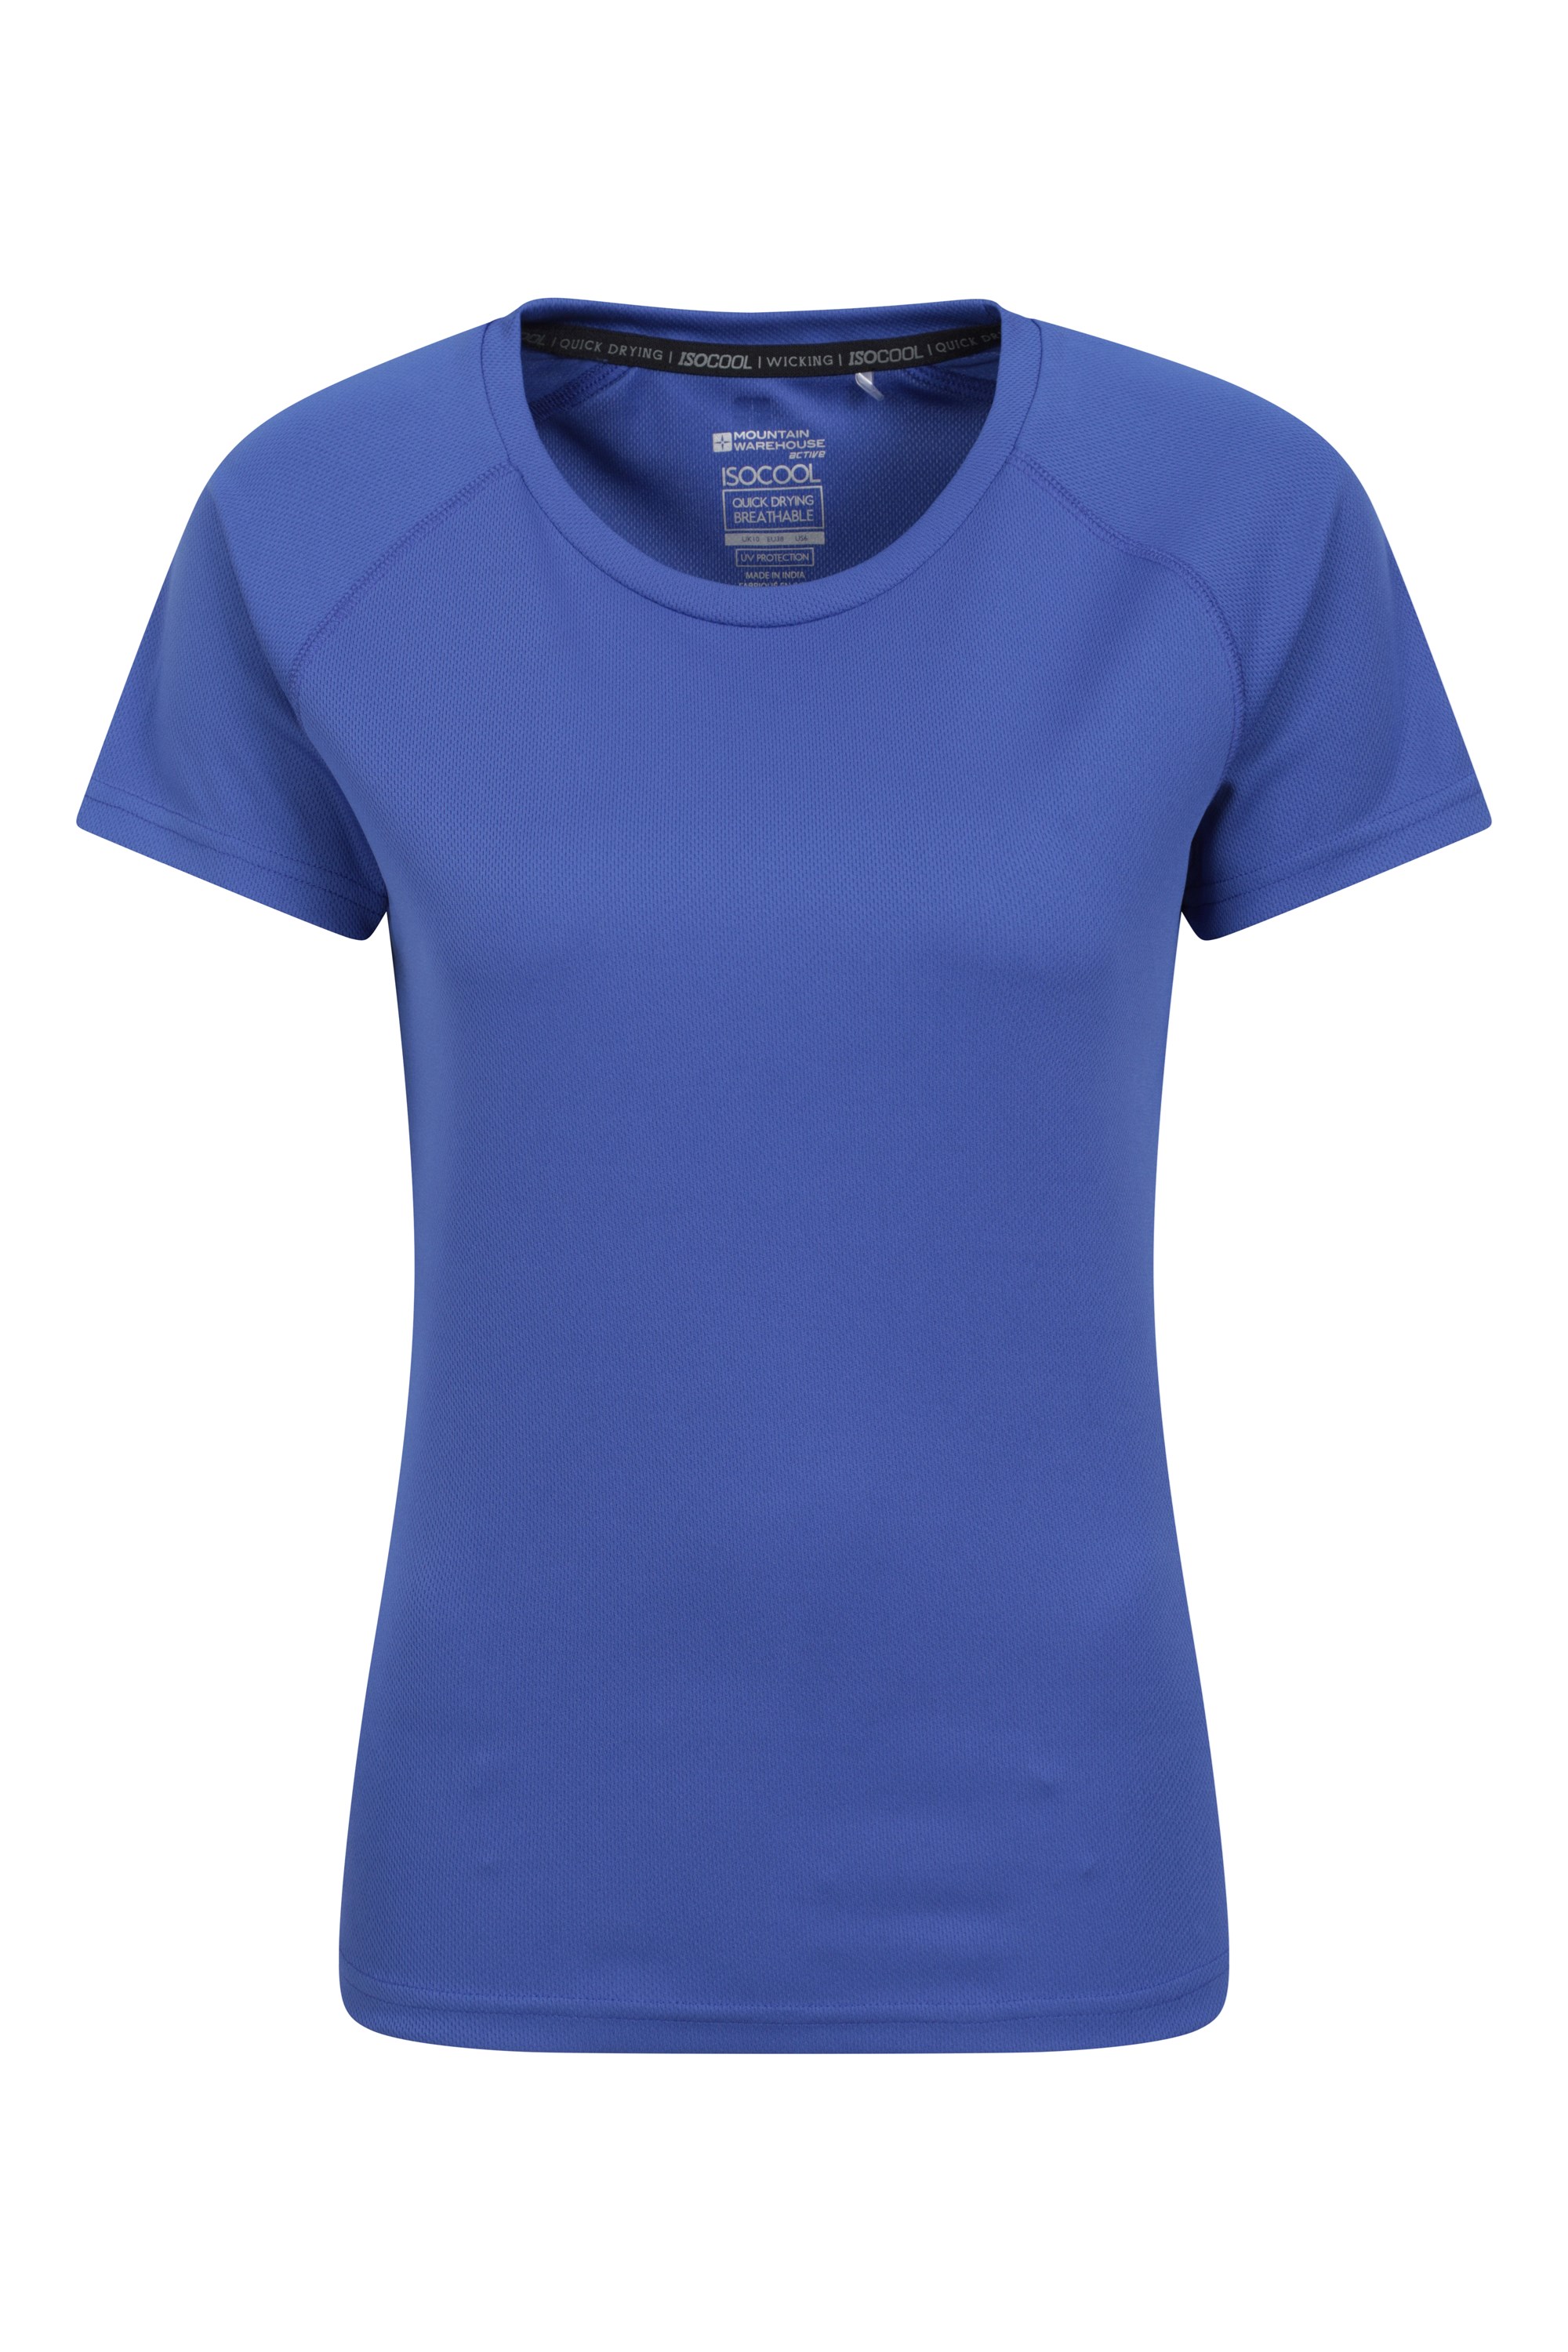 Endurance Womens T-shirt - Dark Blue